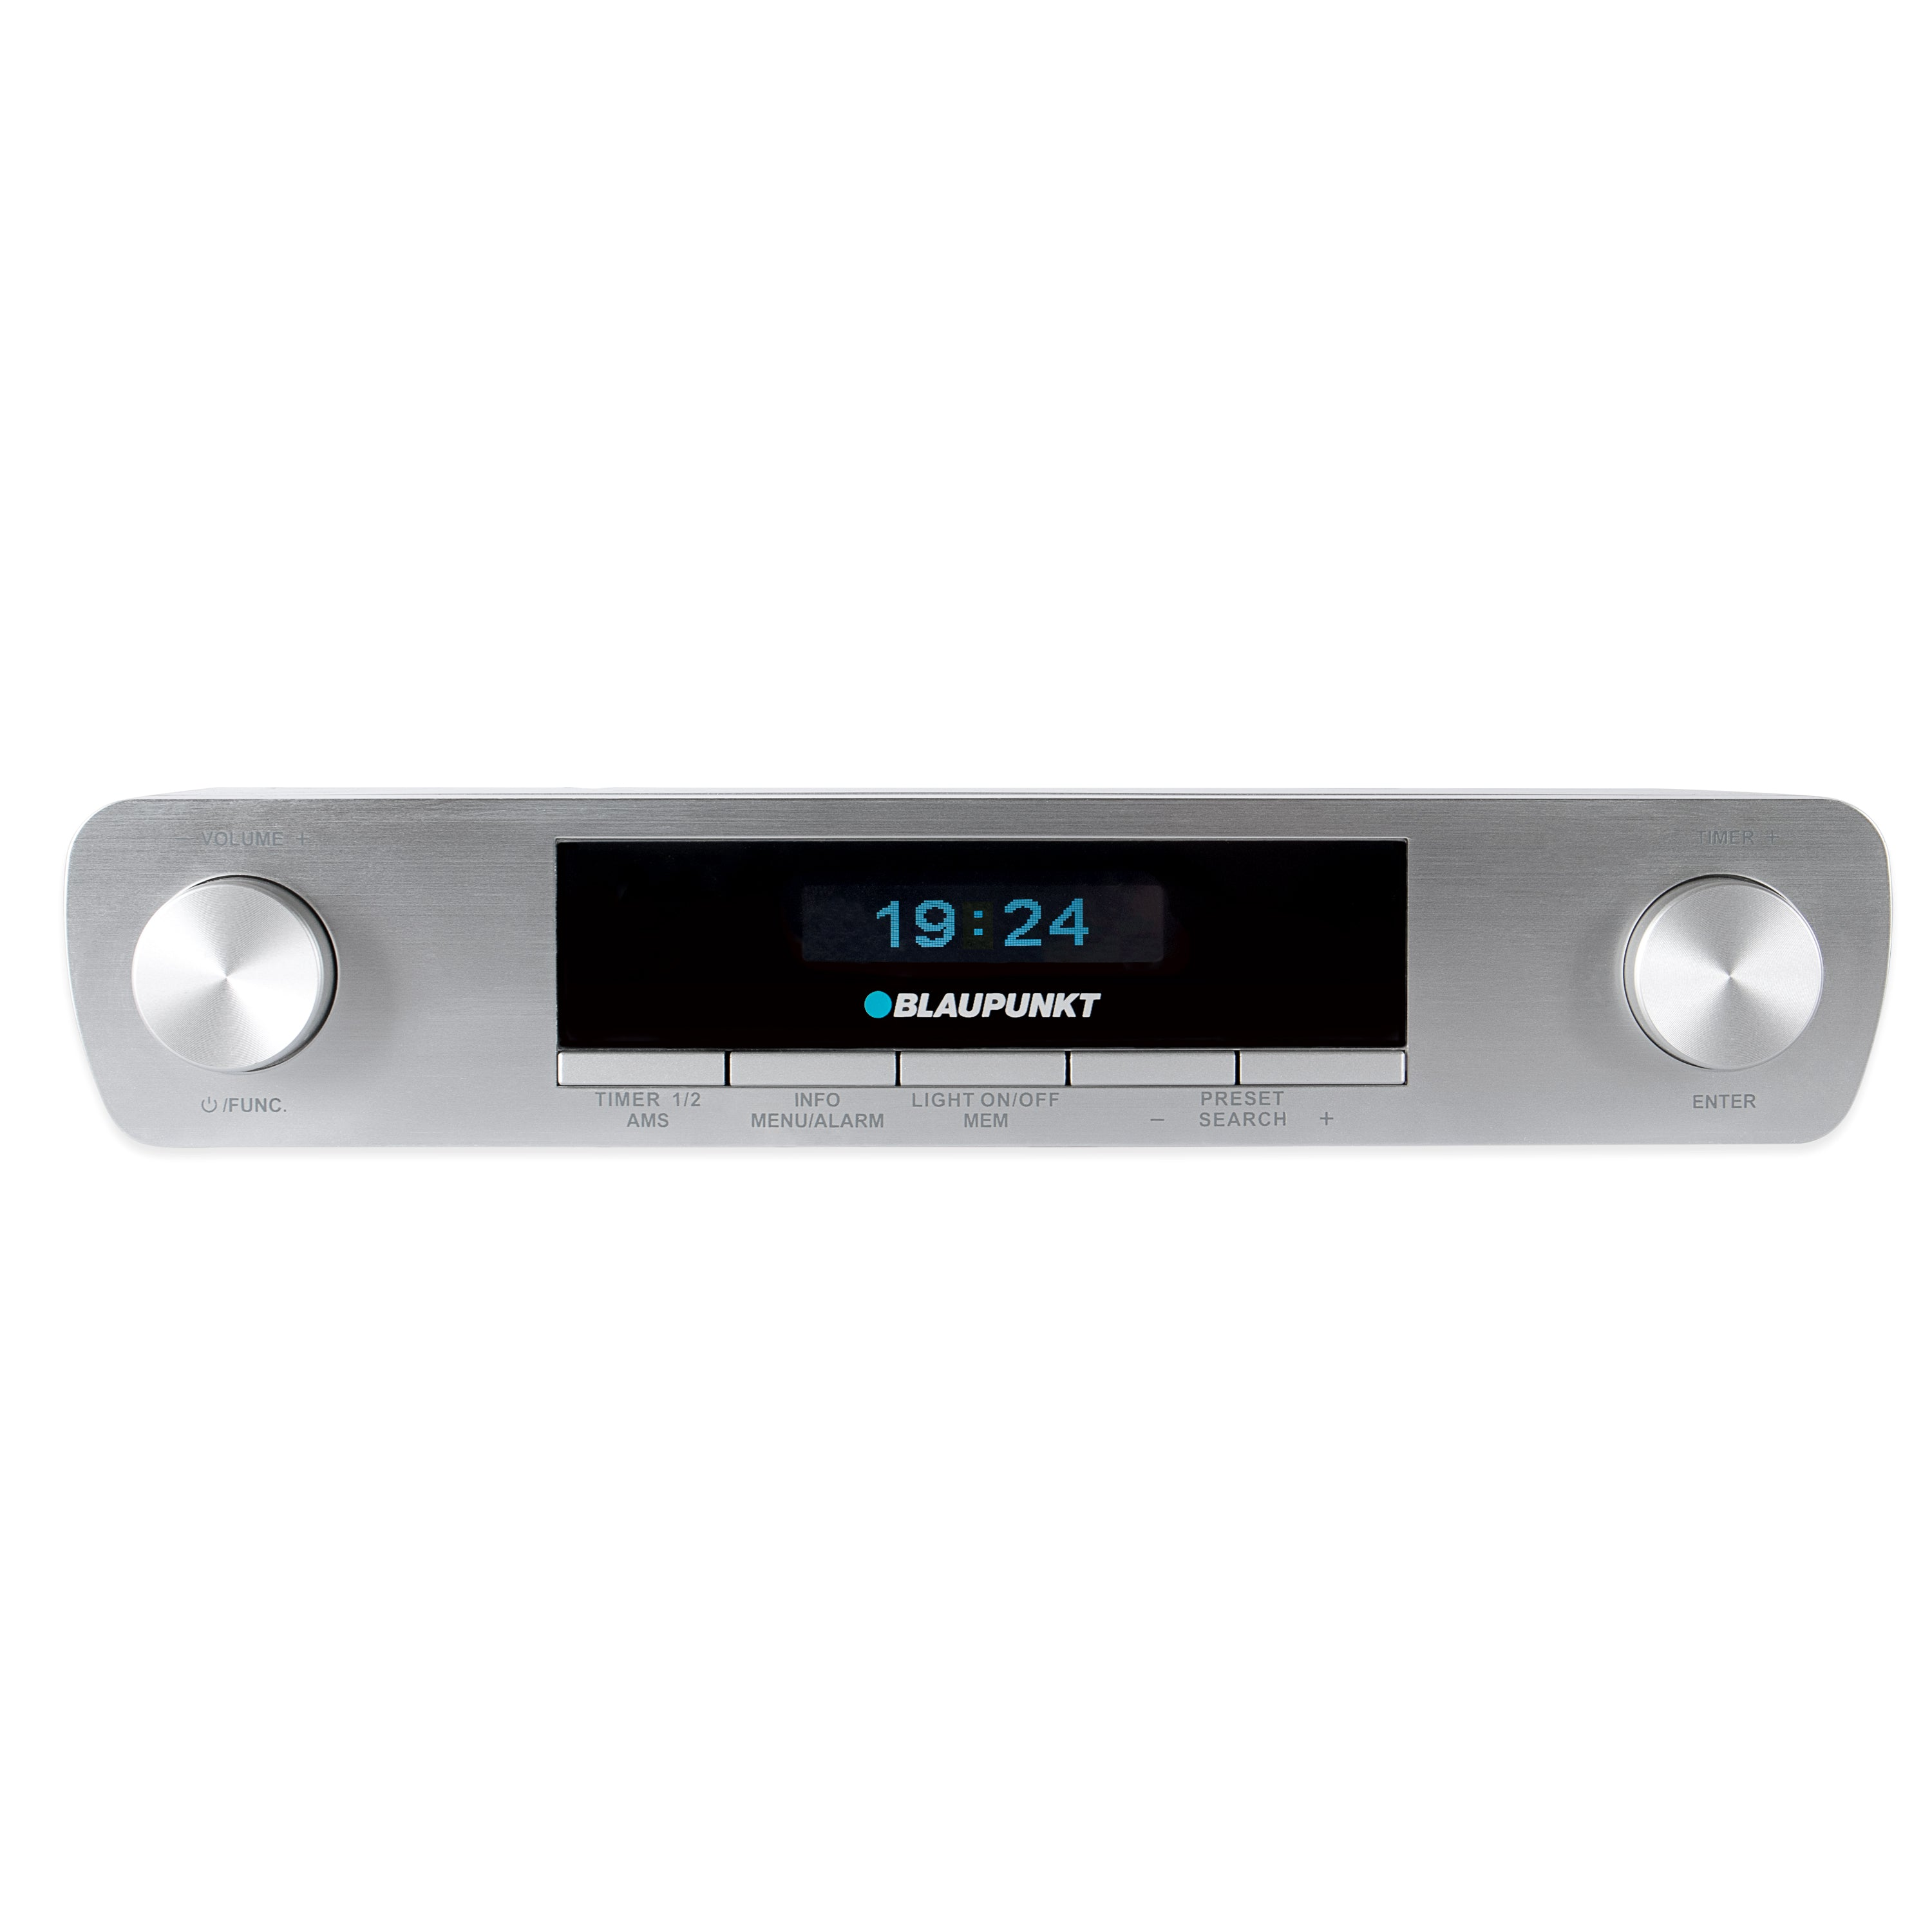 BLAUPUNKT Bluetooth Küchenradio mit Silber DAB, | Küchenradio, DAB, KRD DAB+, FM, DAB+ 30